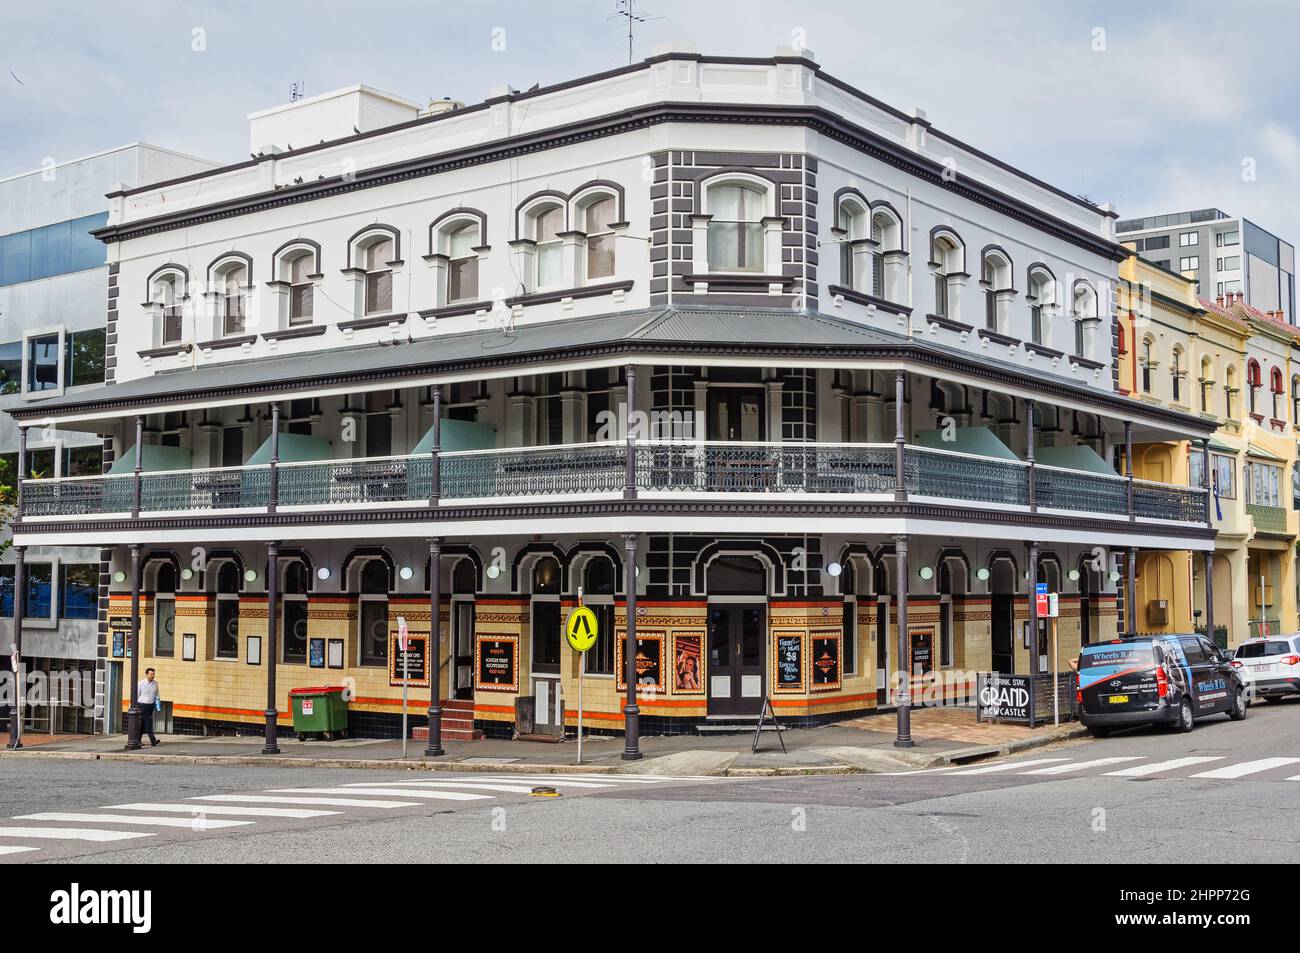 The Grand Hotel on the corner of Church Street and Bolton Street - Newcastle, NSW, Australia Stock Photo